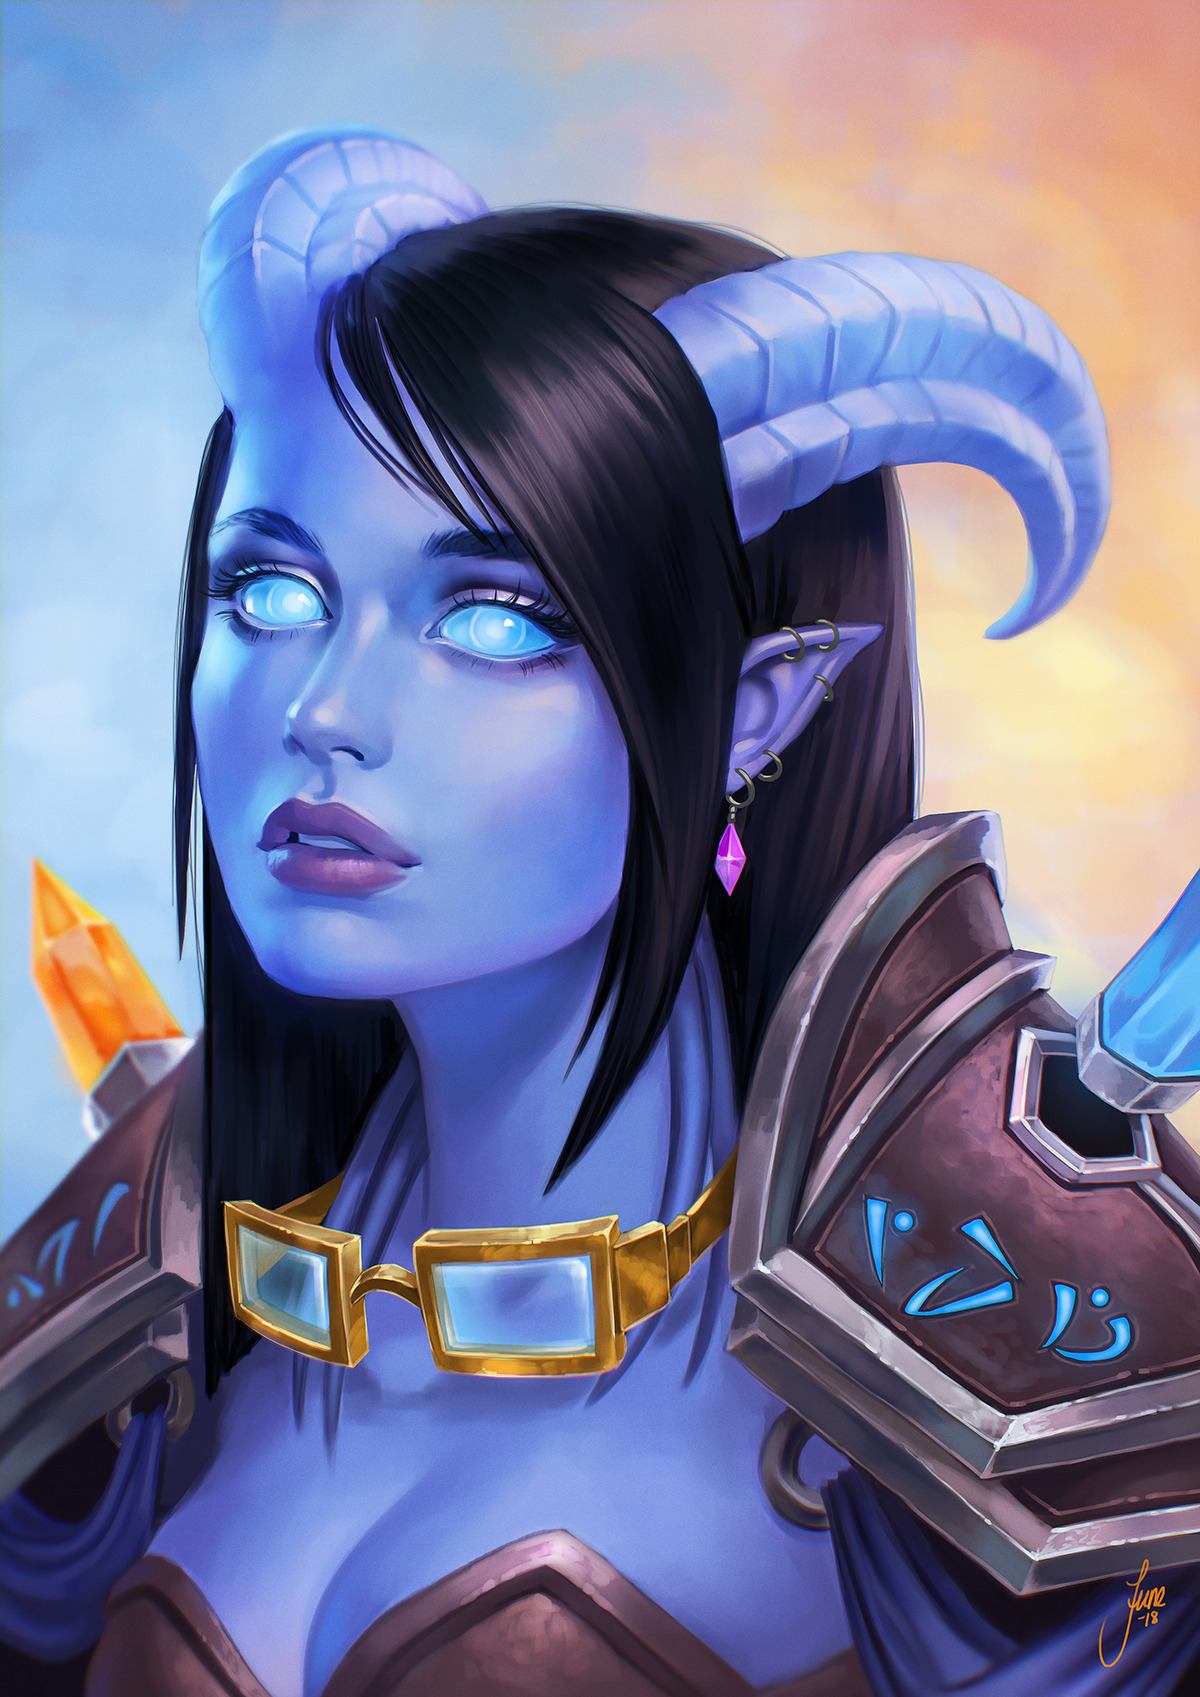 Amazing monster girl (Draenei race) with blue skin: World of Warcraft (Artist: June Jenssen)